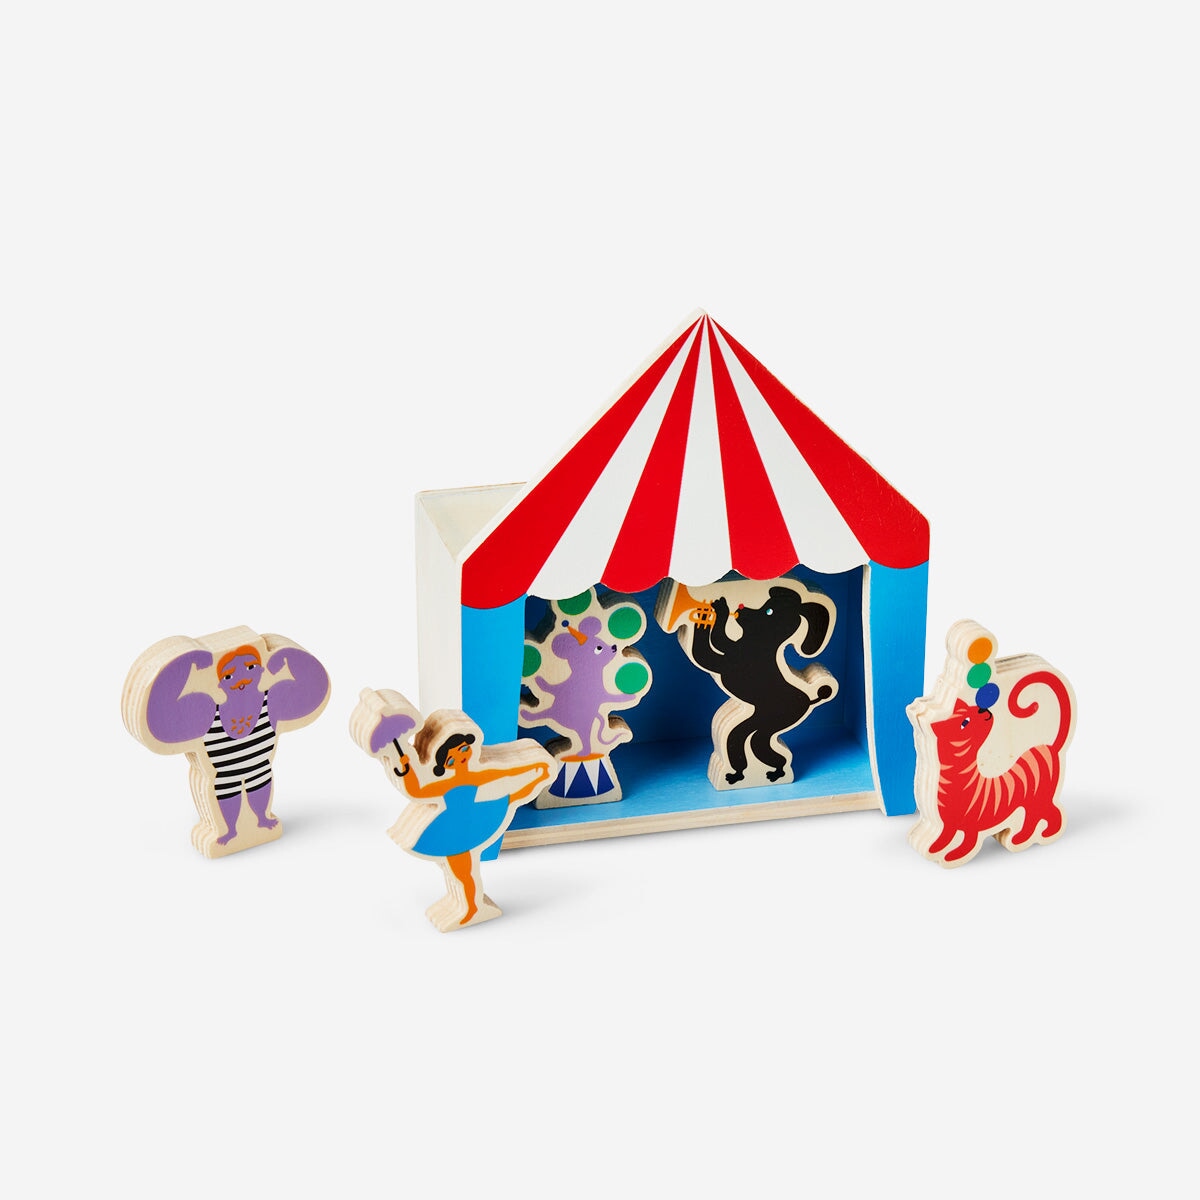 Circus Toy Flying Tiger Copenhagen 